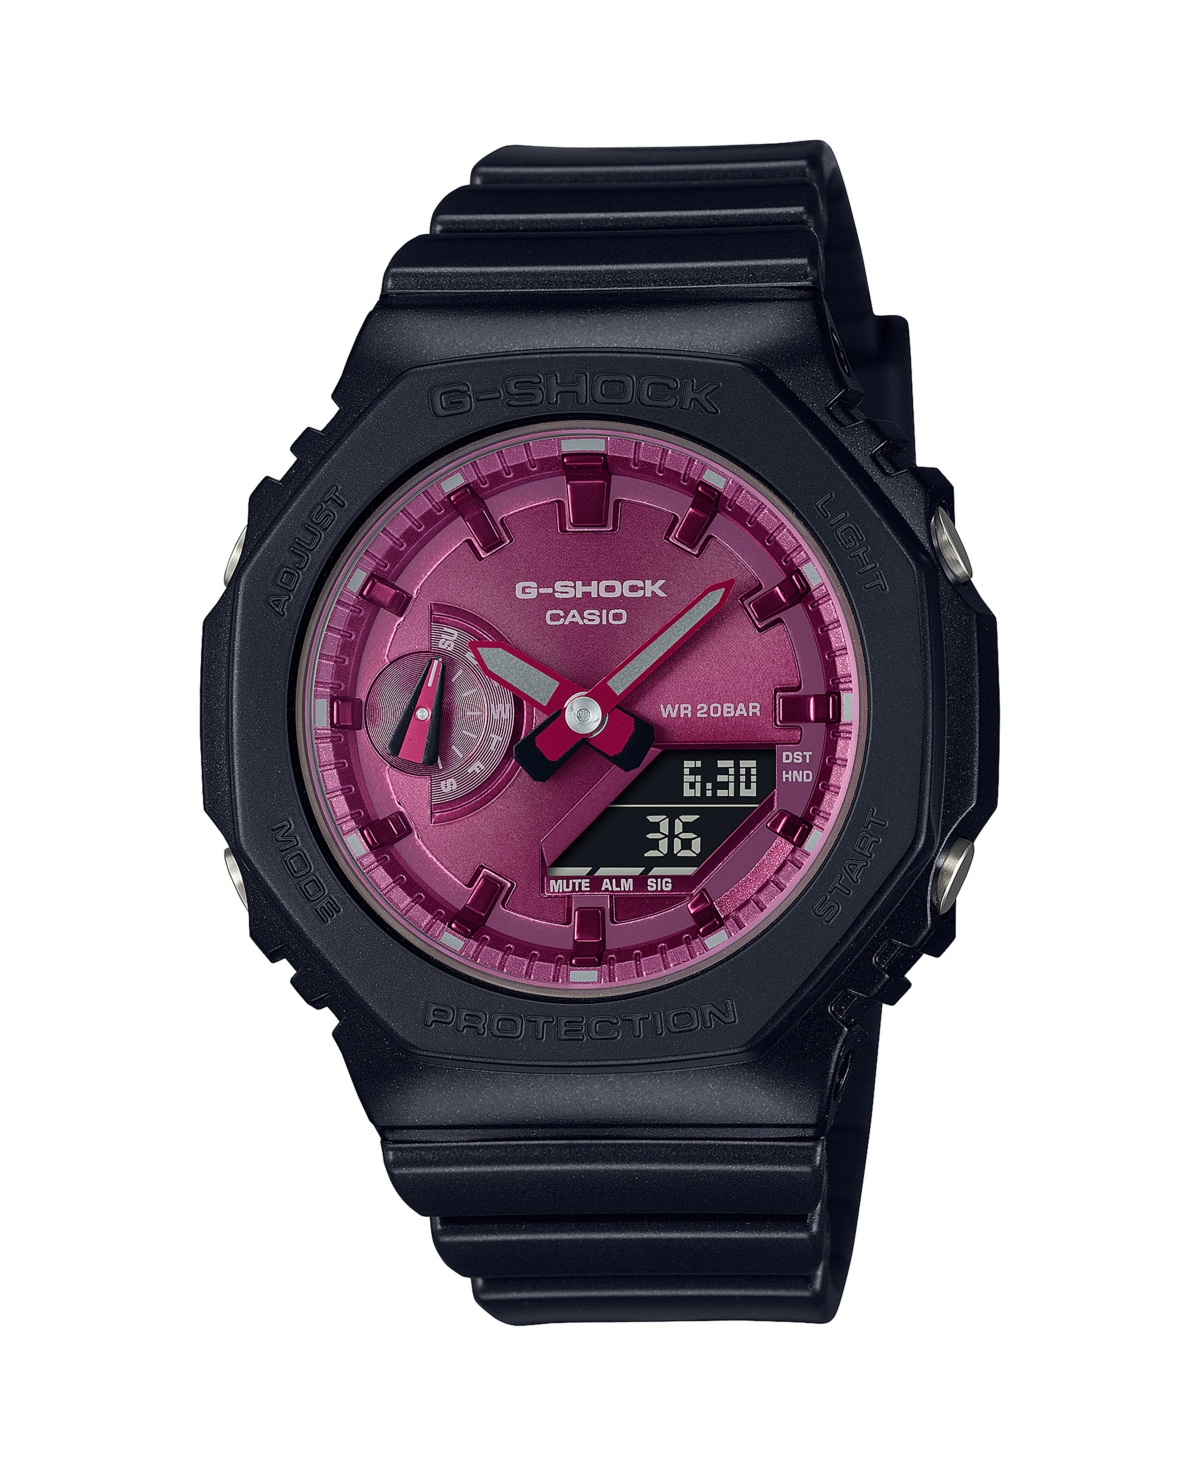 Unisex Analog Digital Black Resin Watch, 42.9mm, GMAS2100RB1A - Black